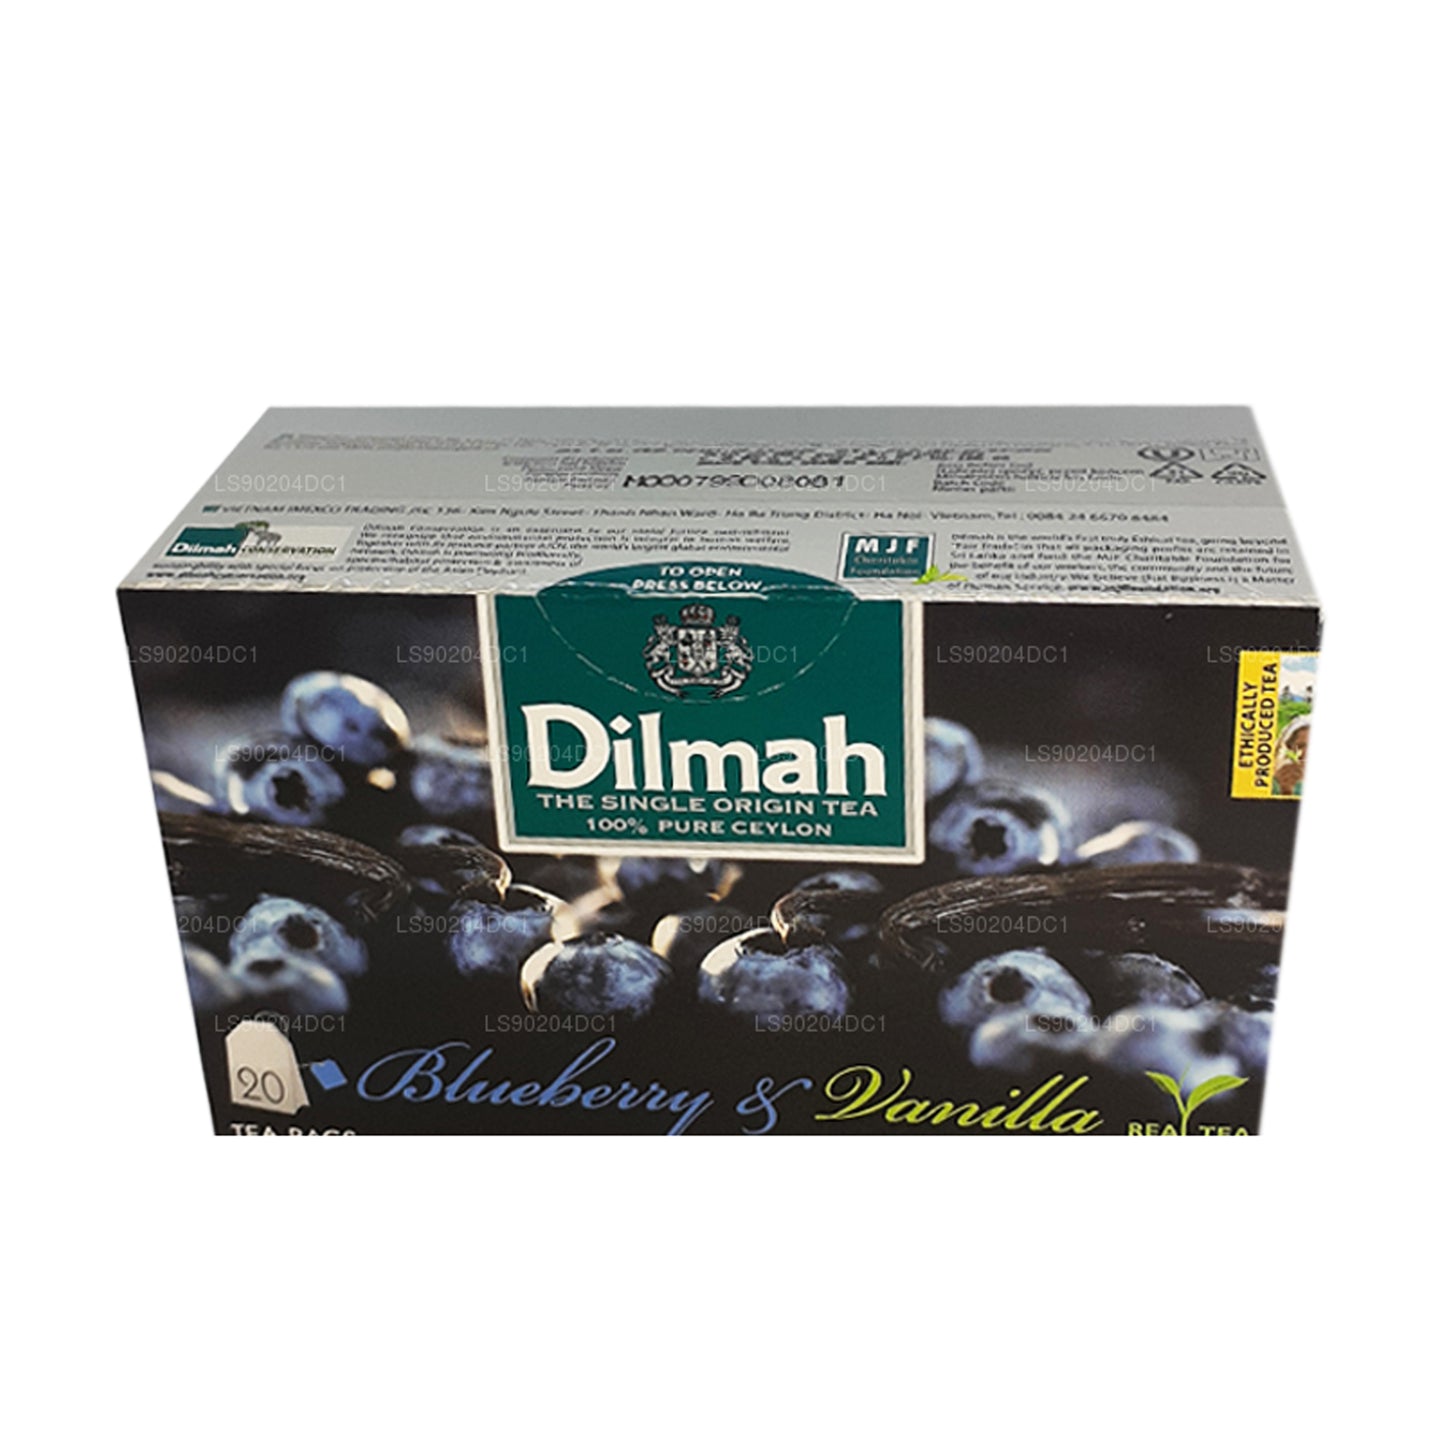 Dilmah mustika- ja vaniljemaitseline tee (40g) 20 teekotti